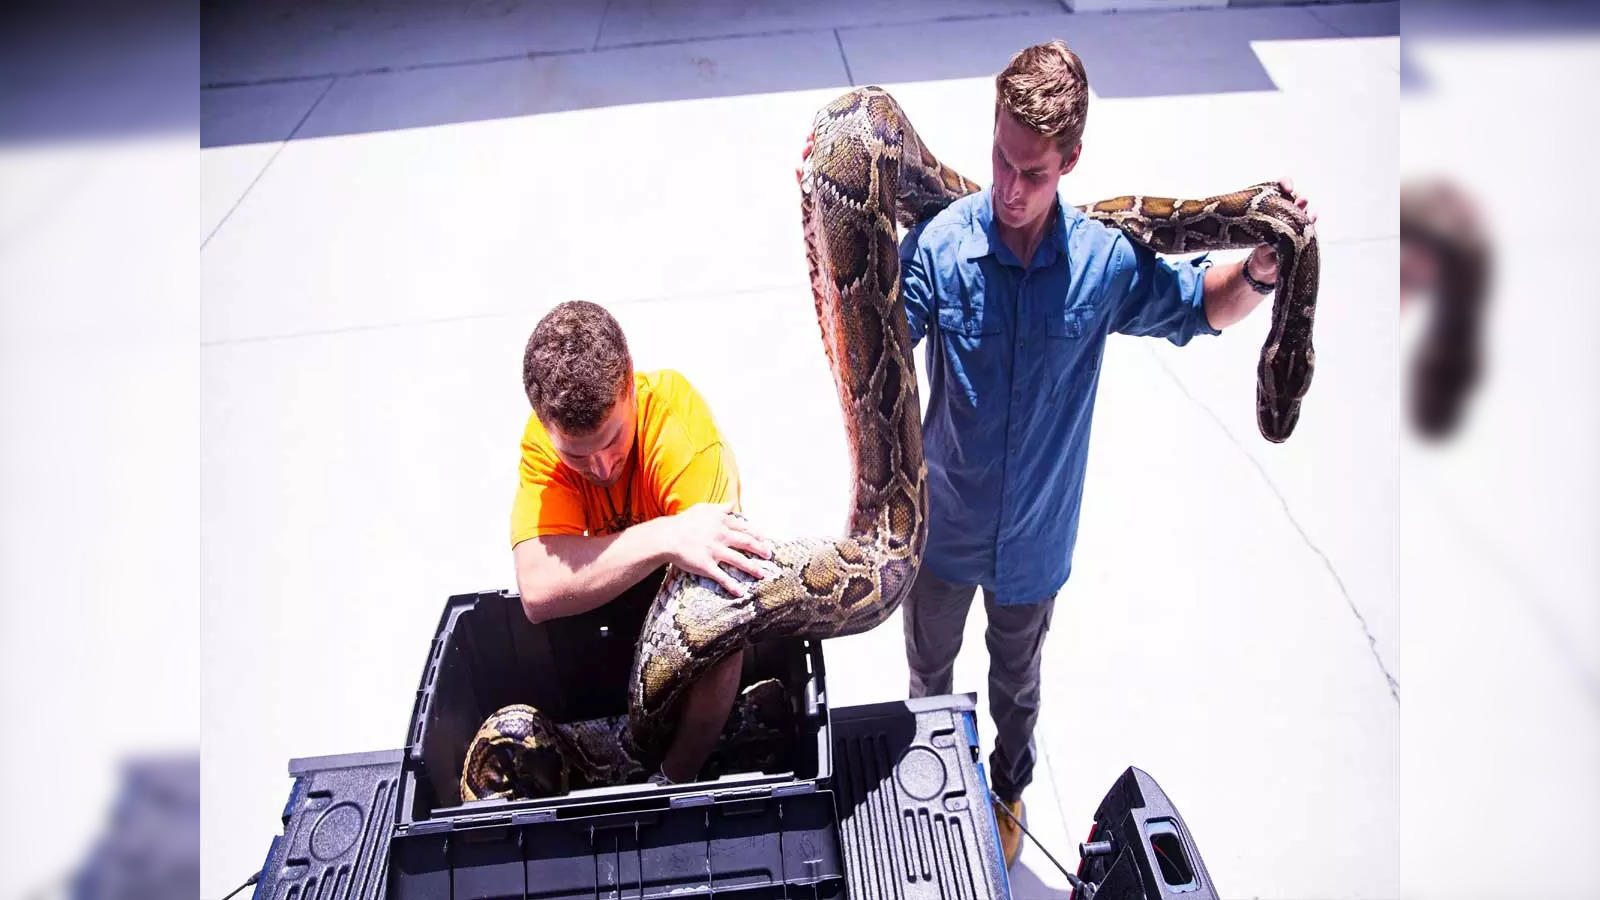 longest Burmese python: Longest ever 19-foot Burmese python caught in South  Florida raises concerns - The Economic Times